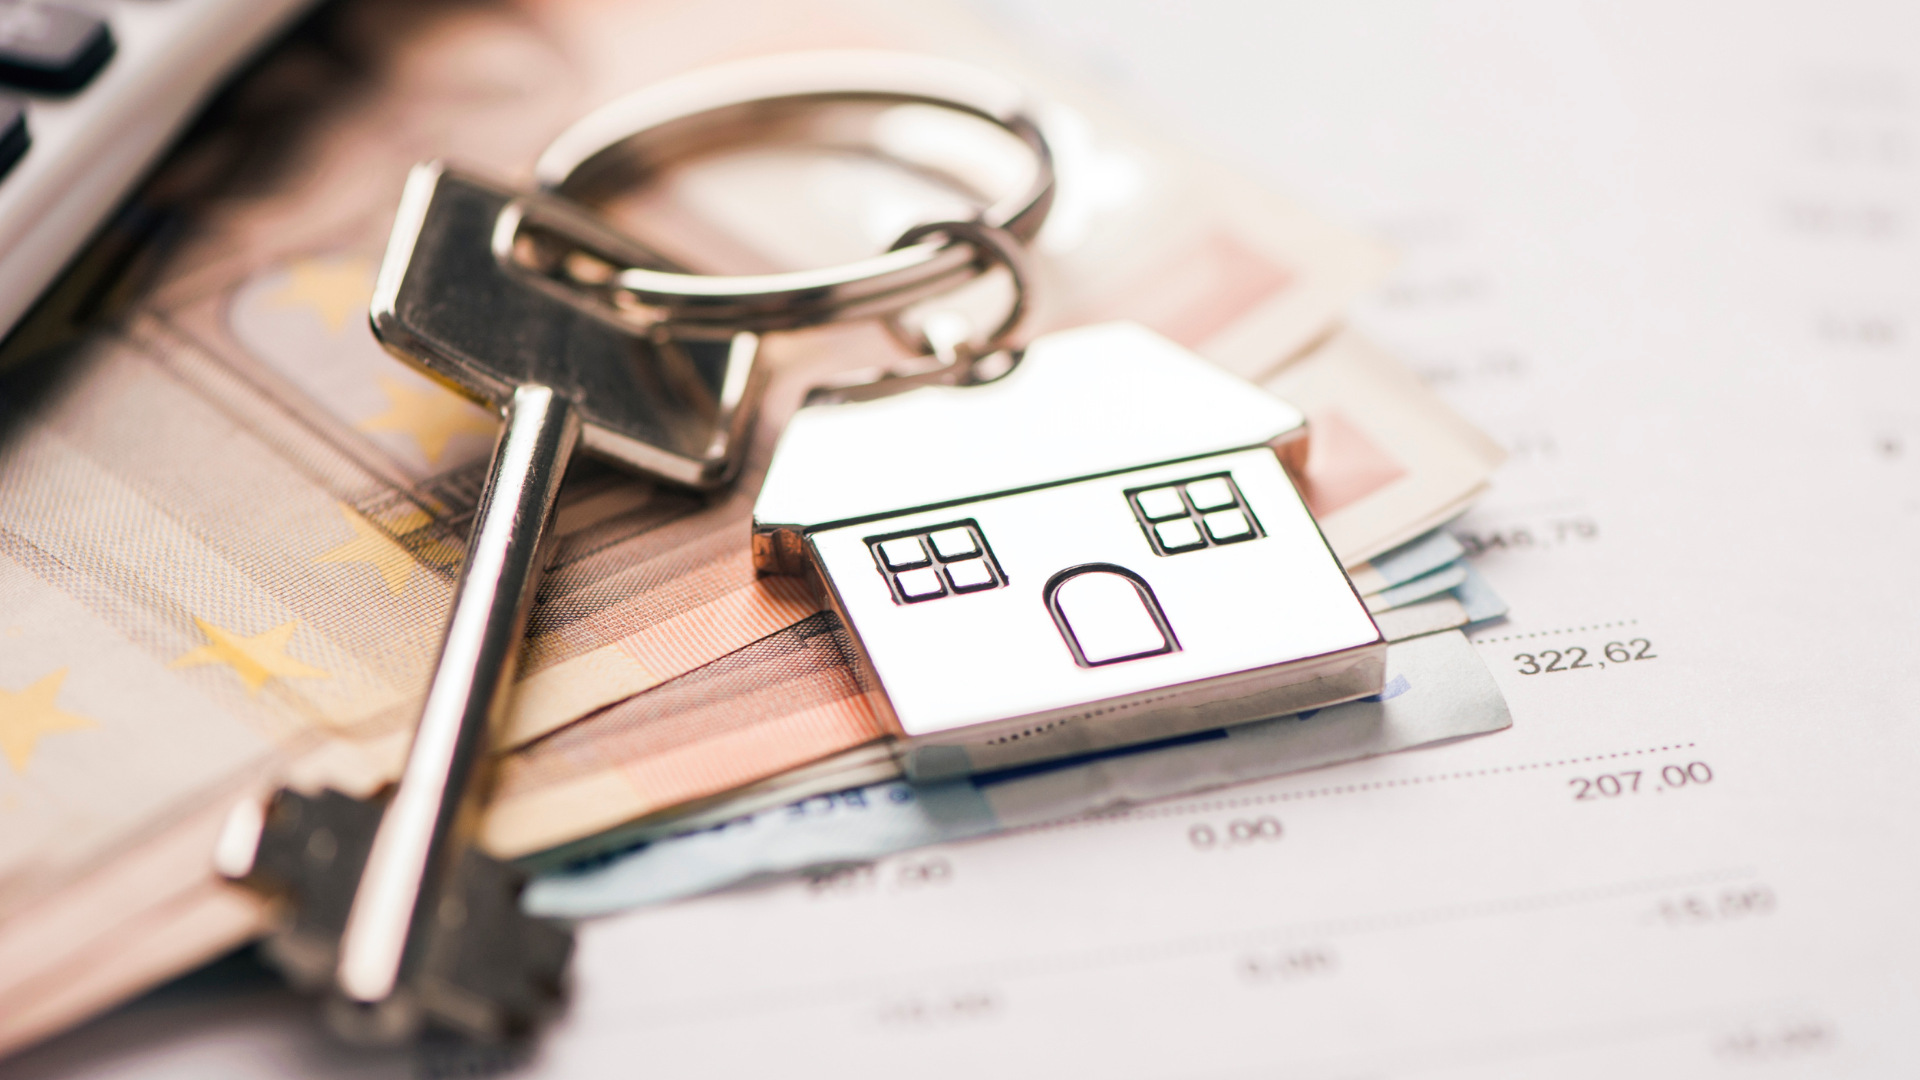 hogere hypotheekrente dalende huizenprijzen